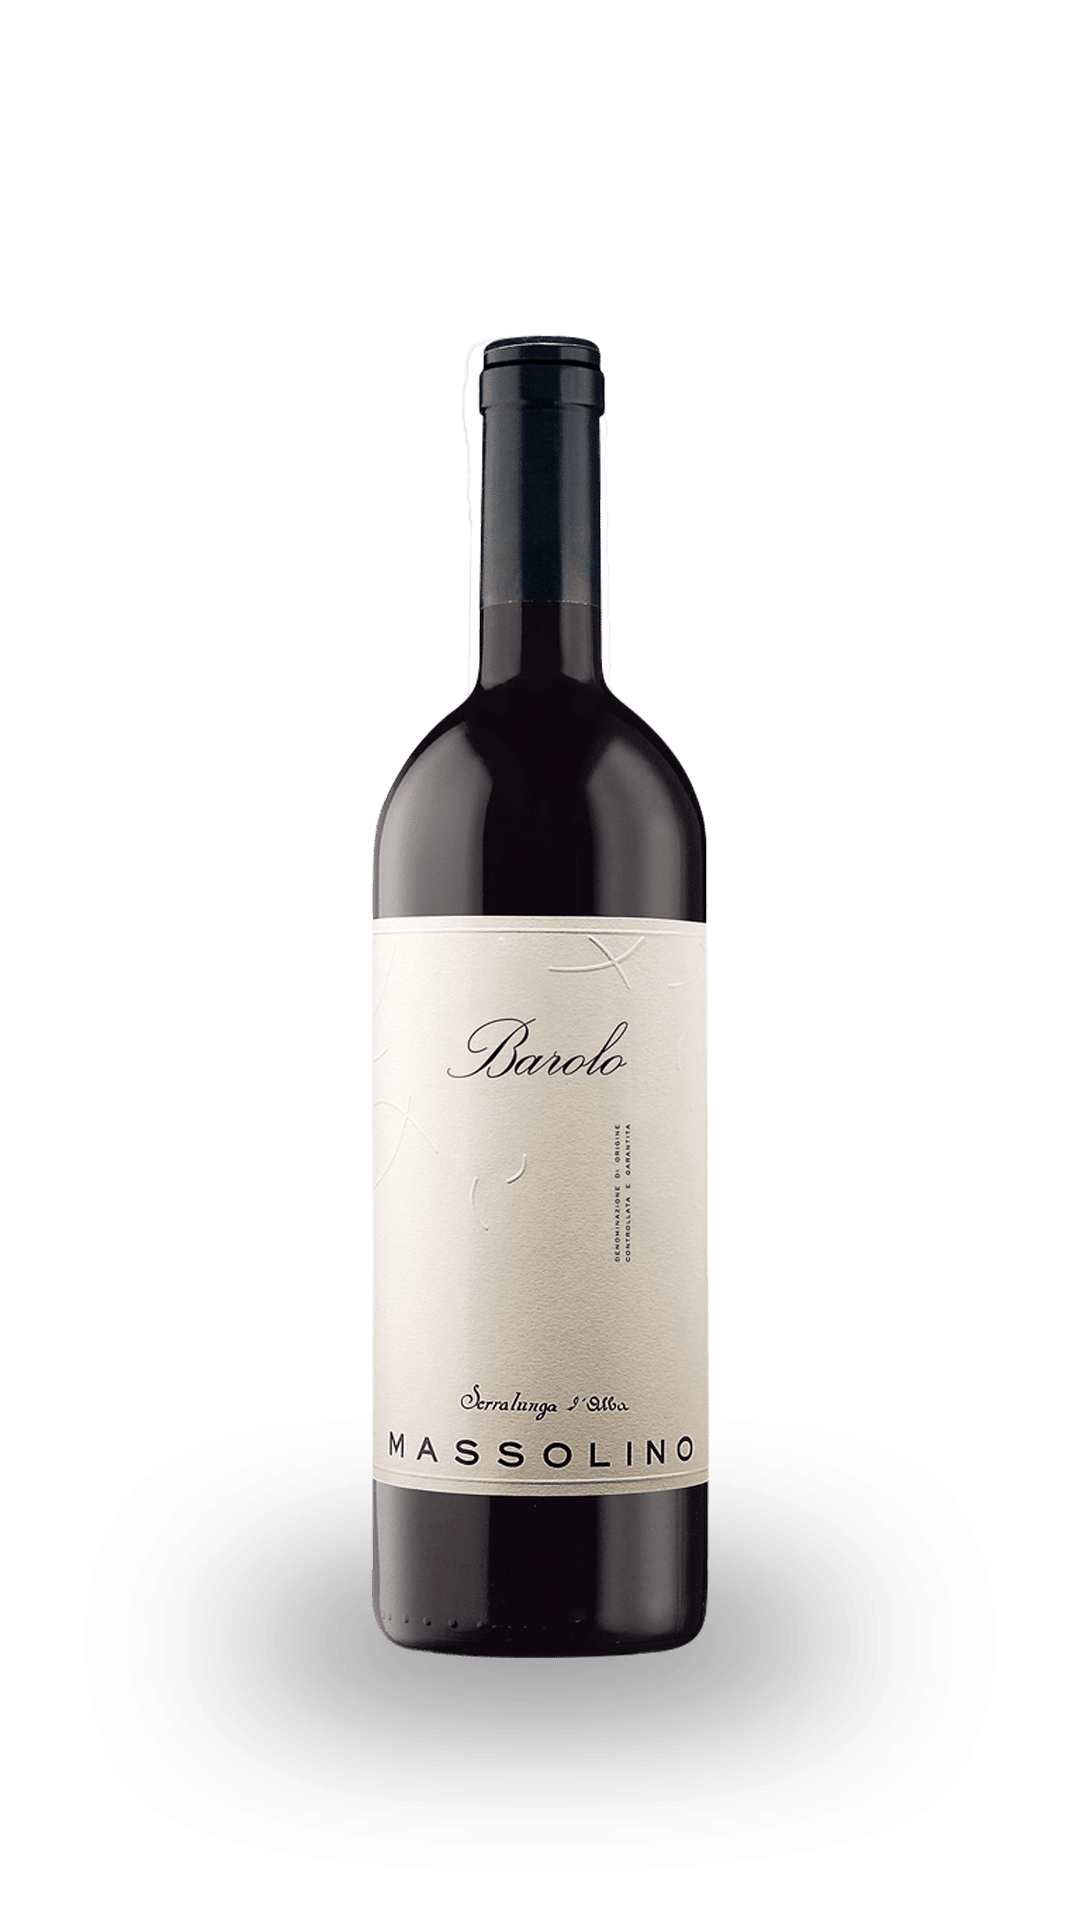 BAROLO MASSOLINO DOCG 2016 75 CL